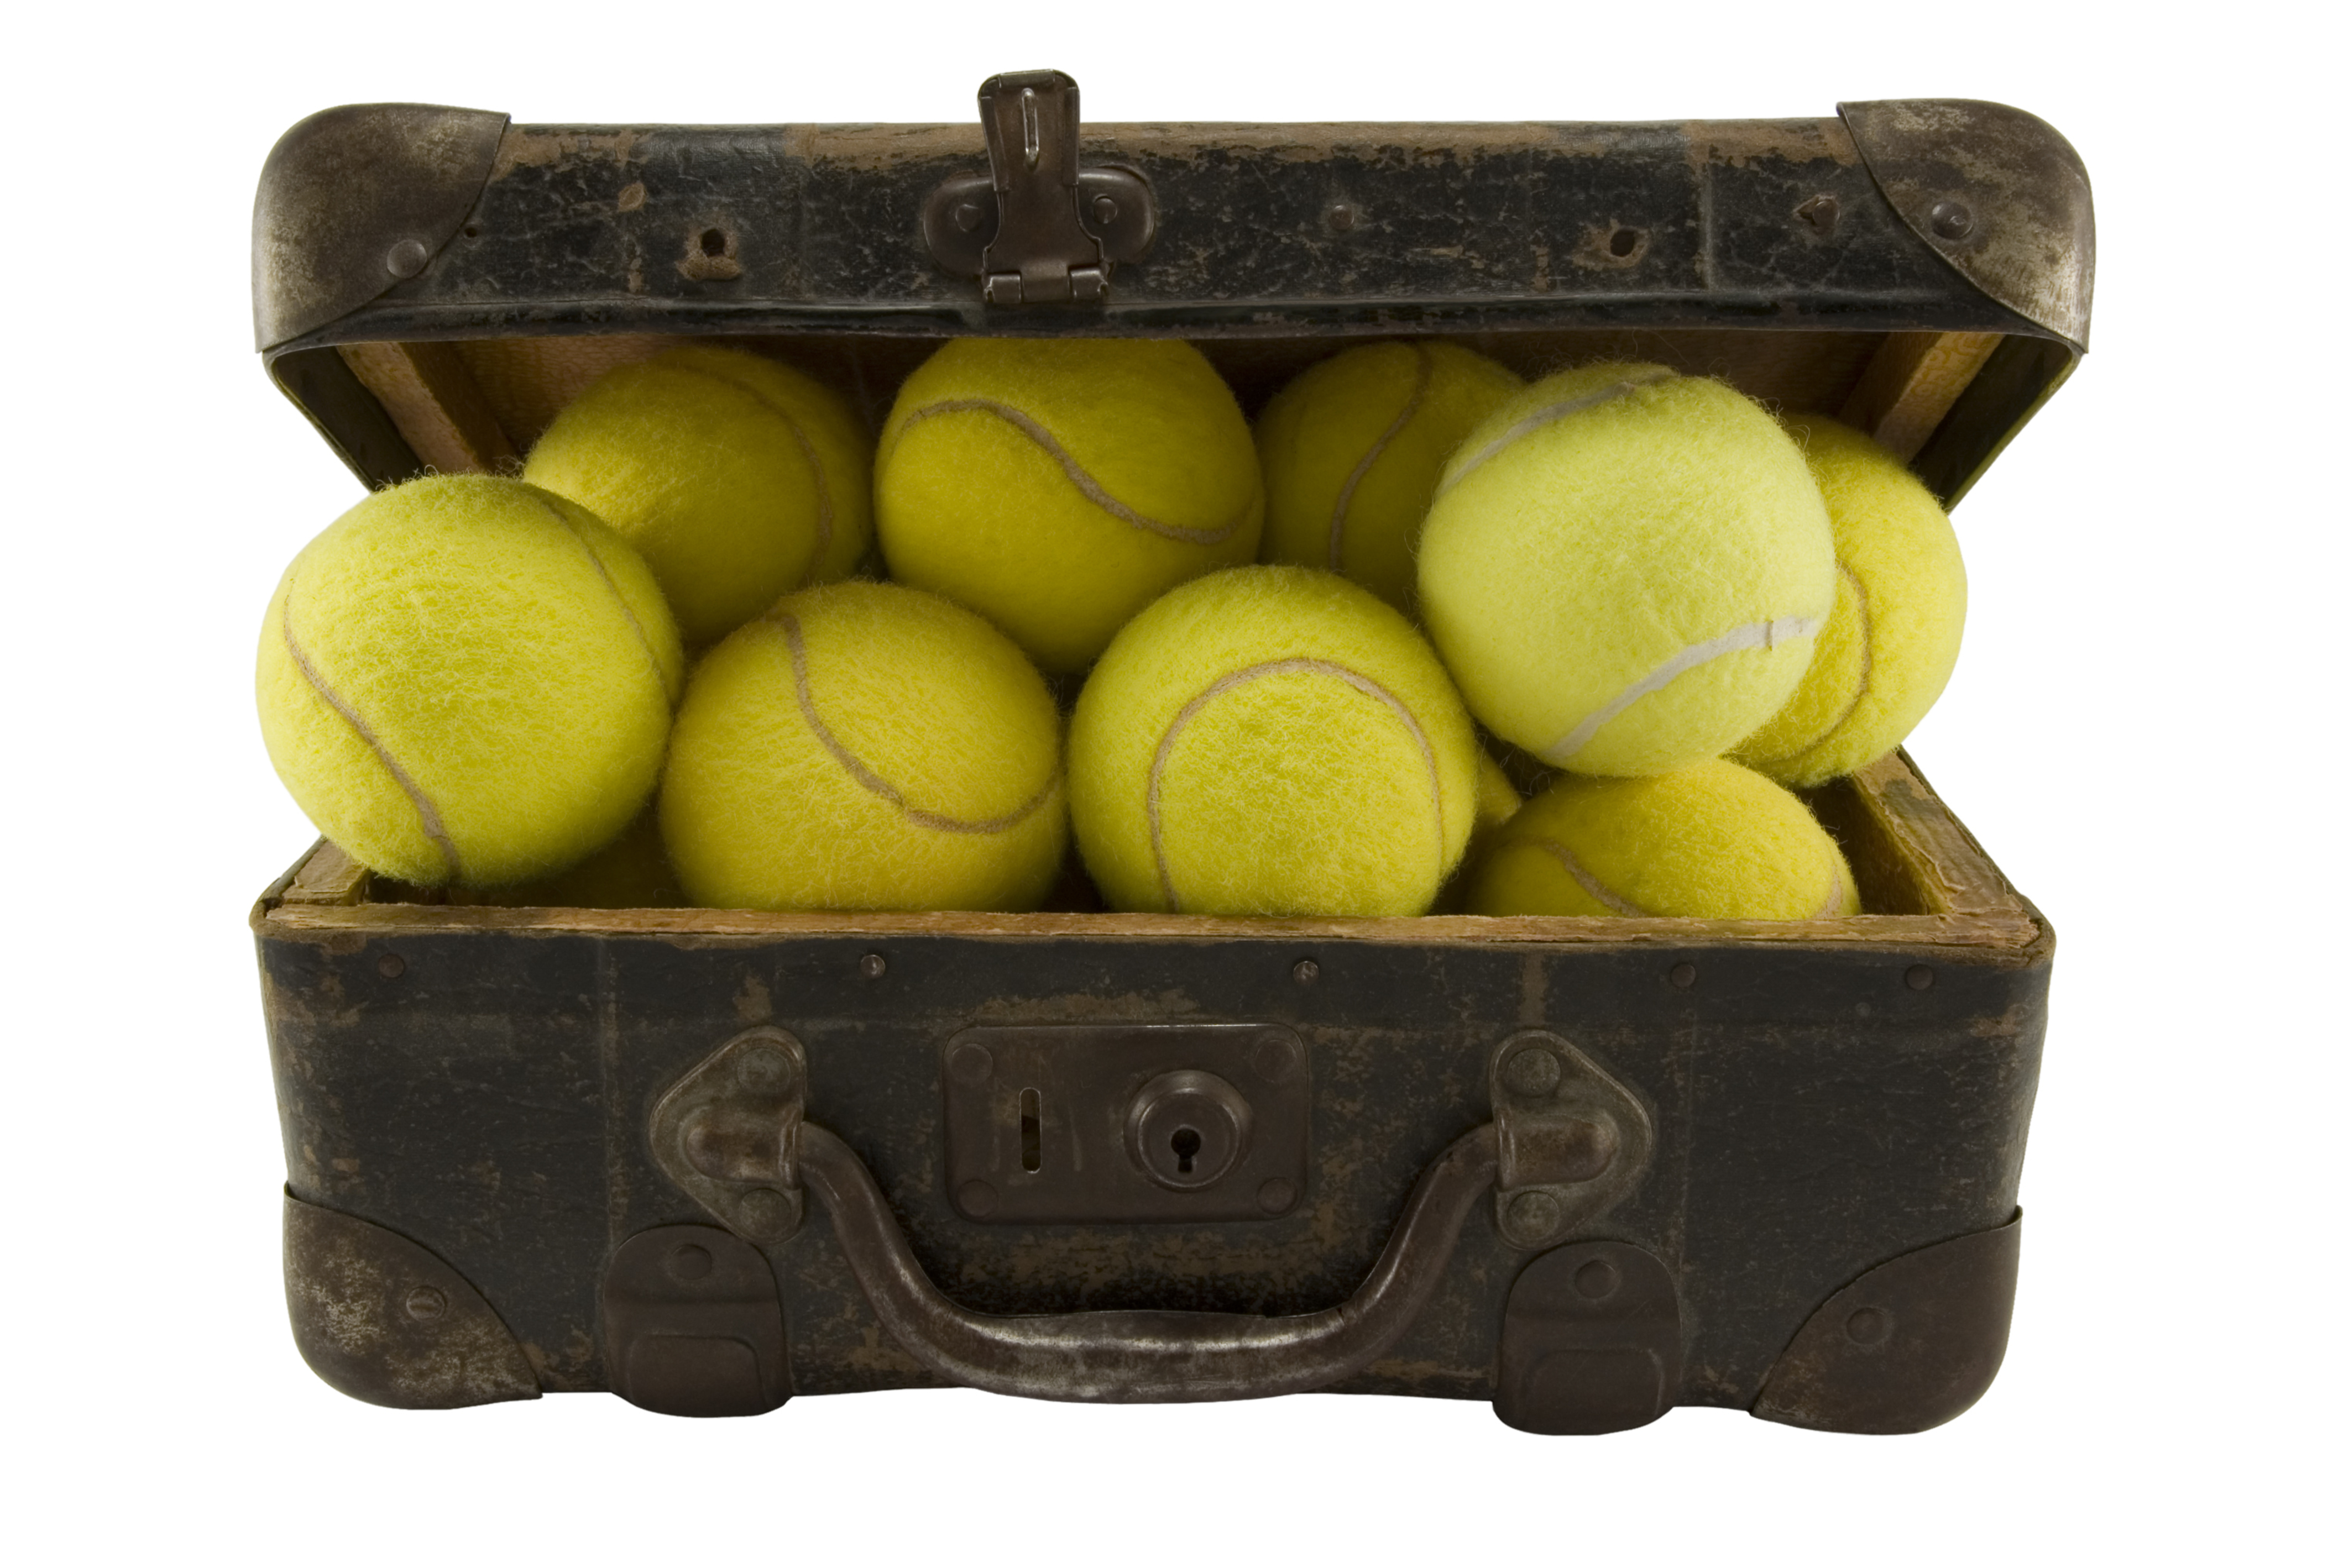 © Ungorf | Dreamstime.com - Old Suitcase Full Of Tennis Balls Photo